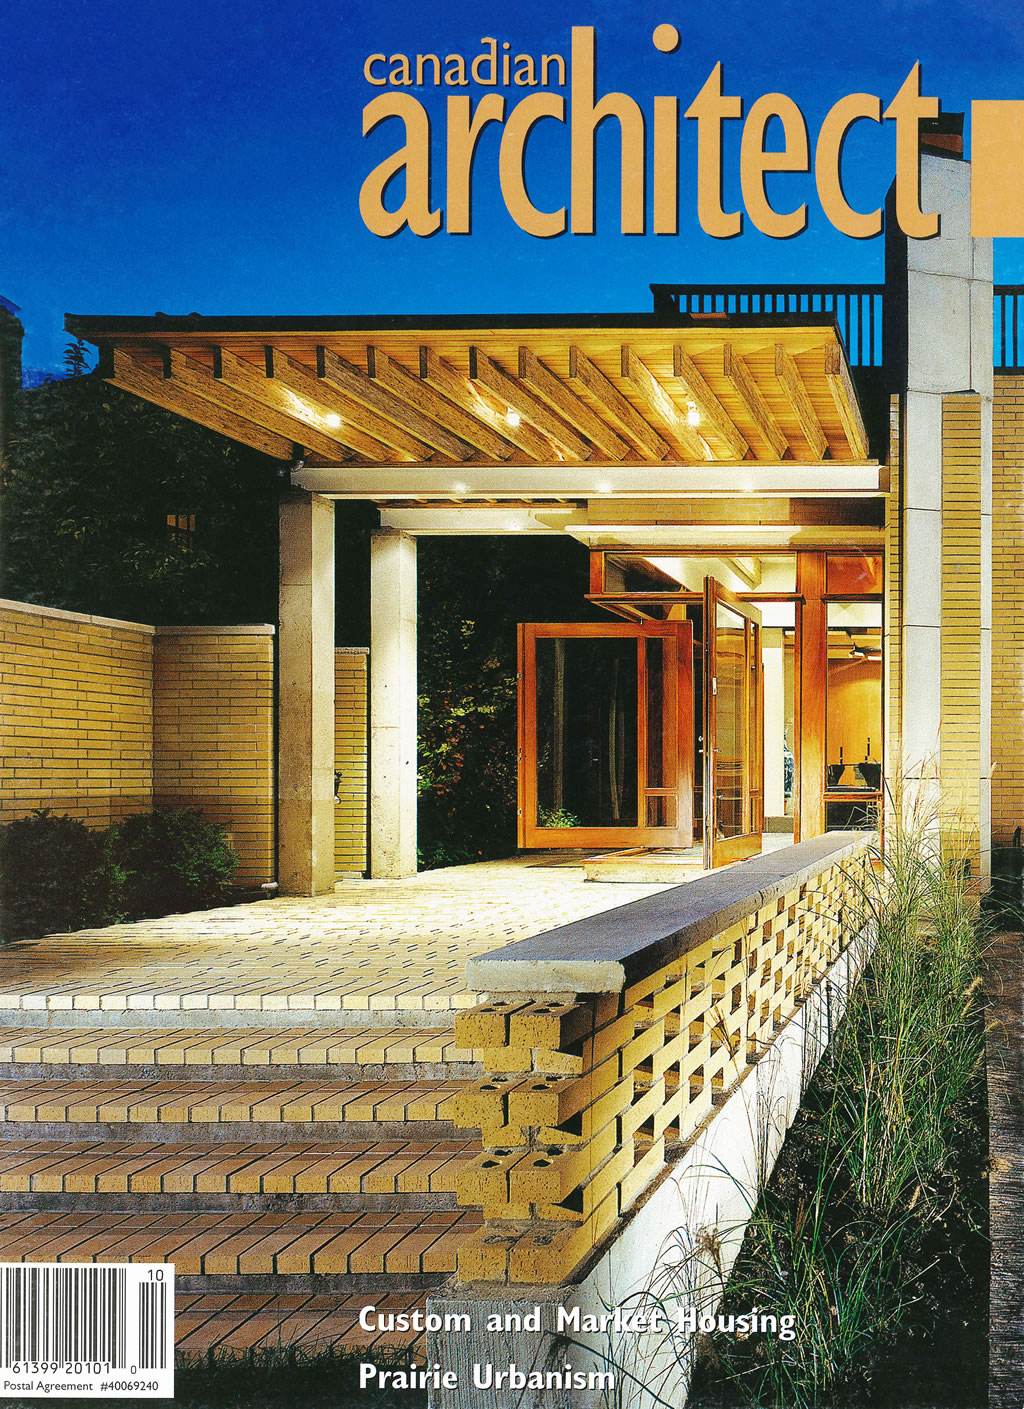 2a.-sub-canadian-architect-magazine-cover